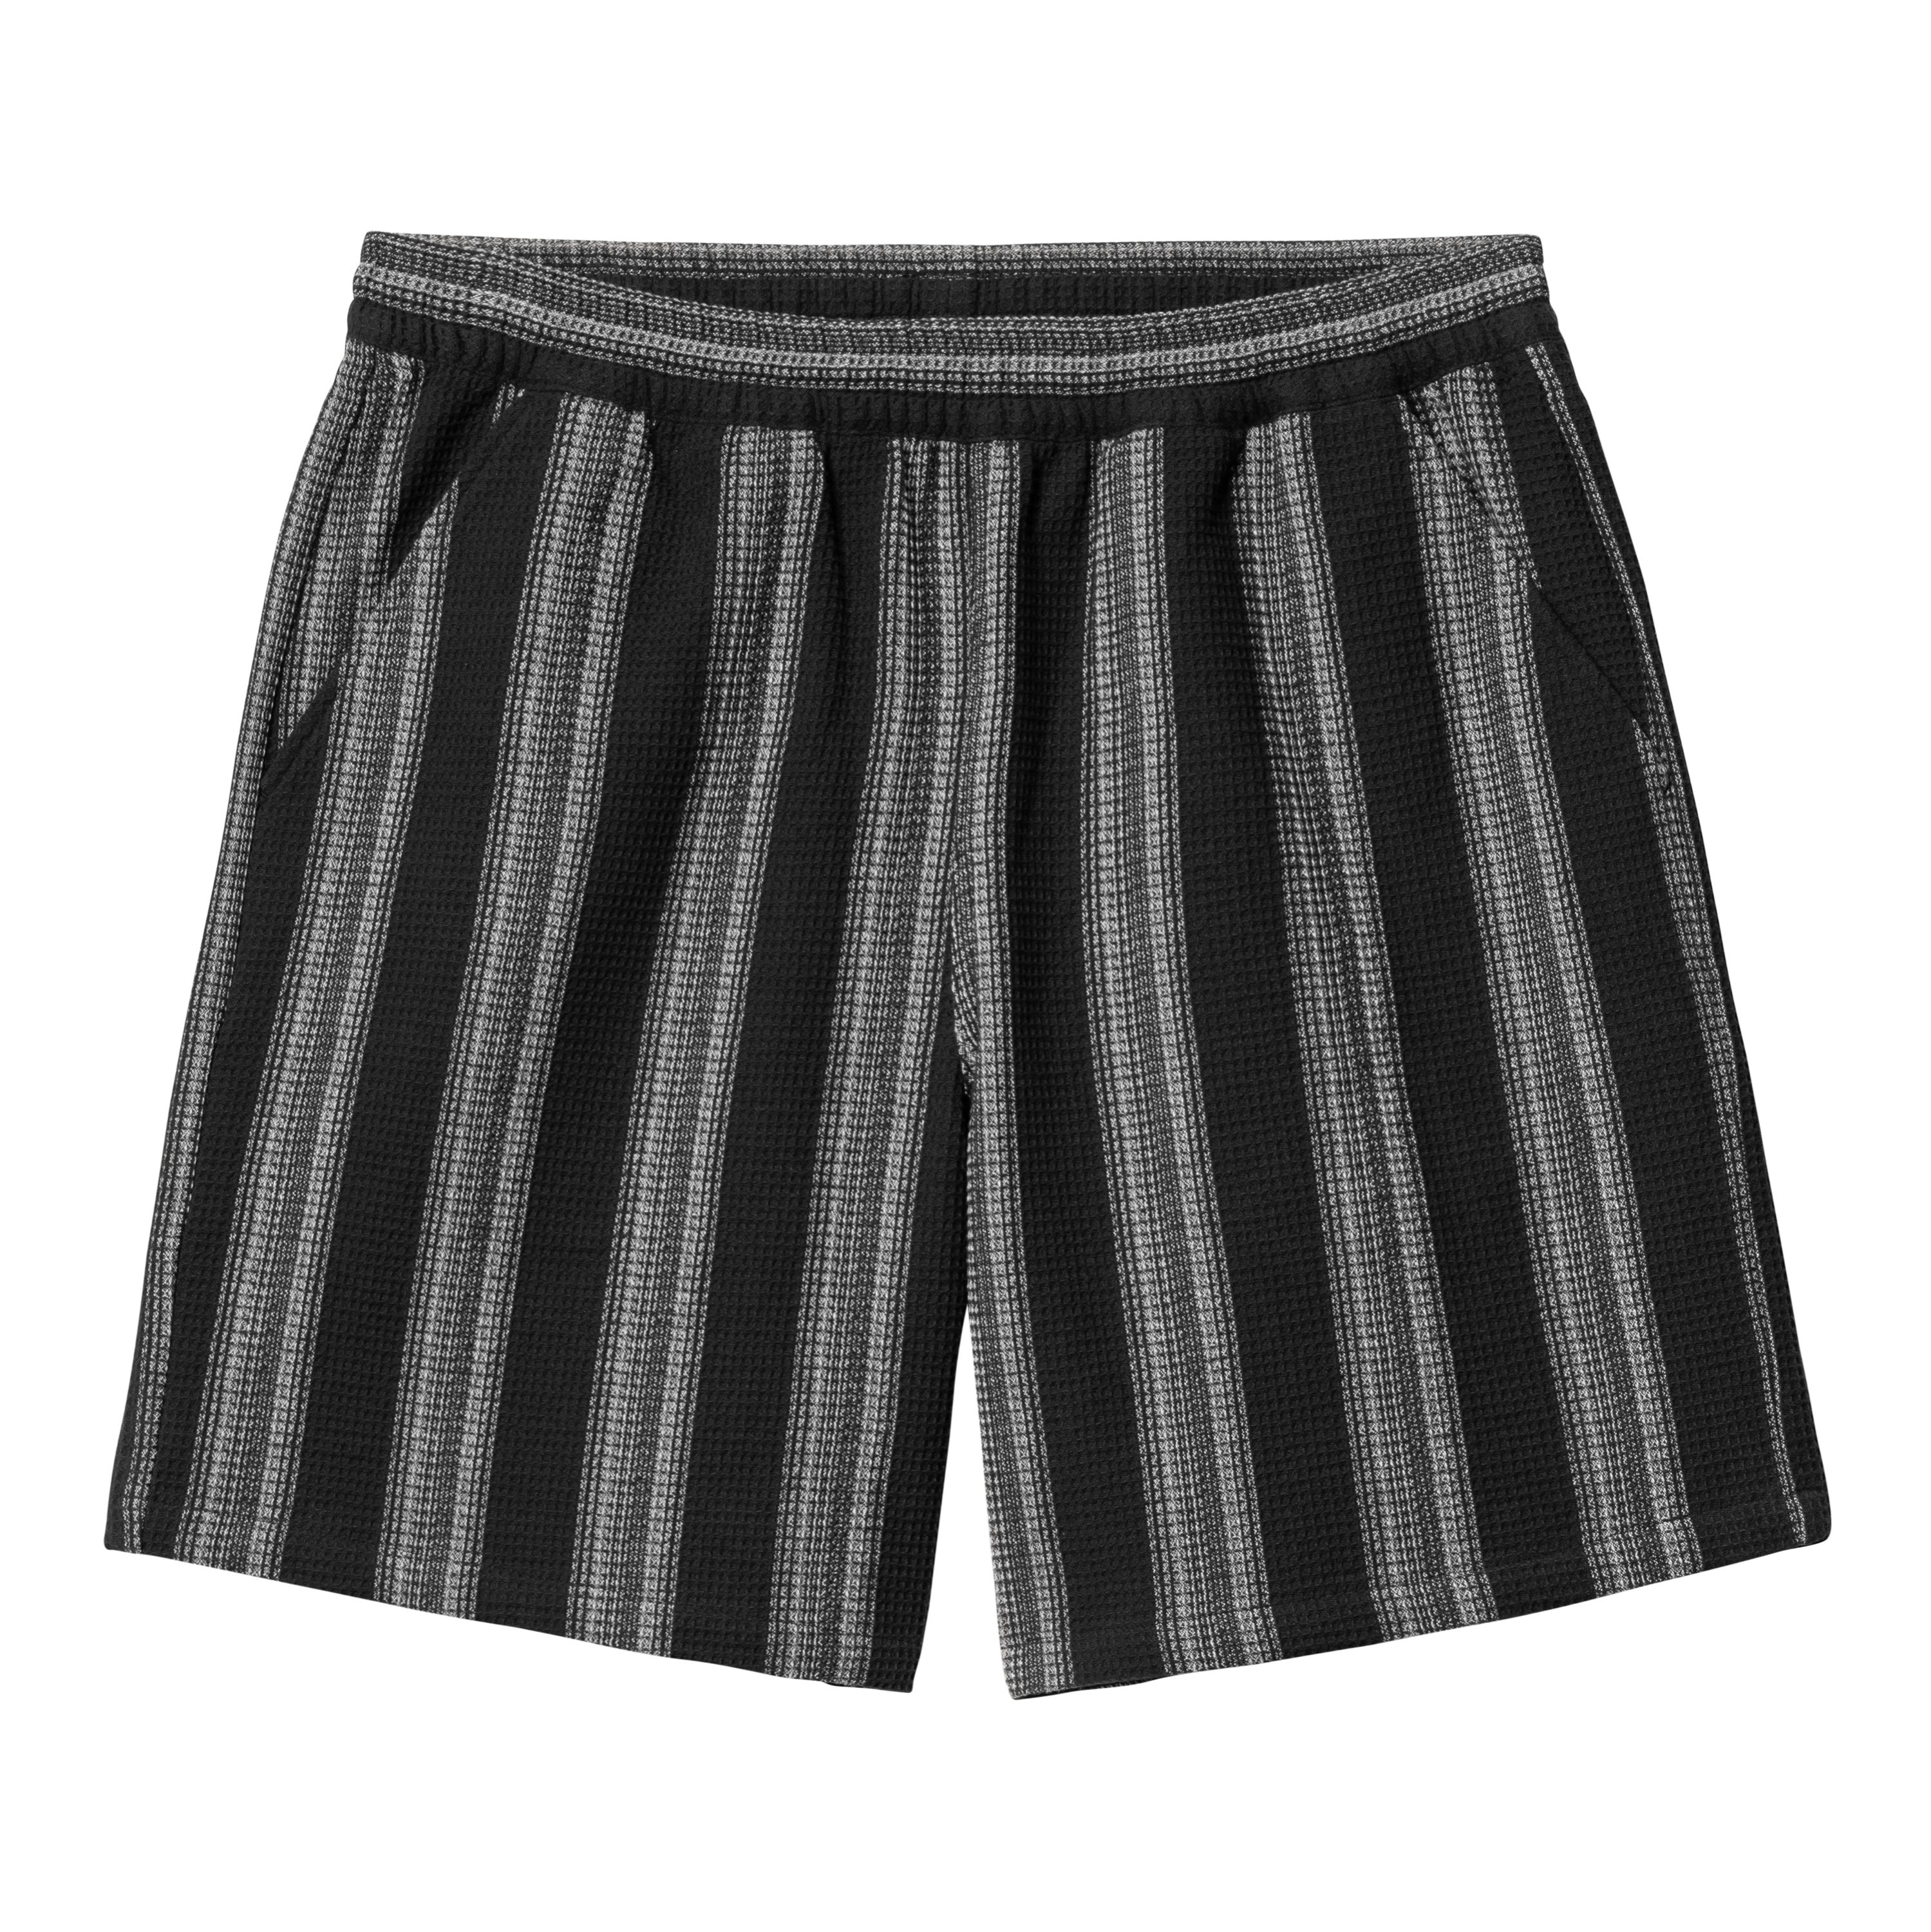 Dodson Shorts Black Stripe